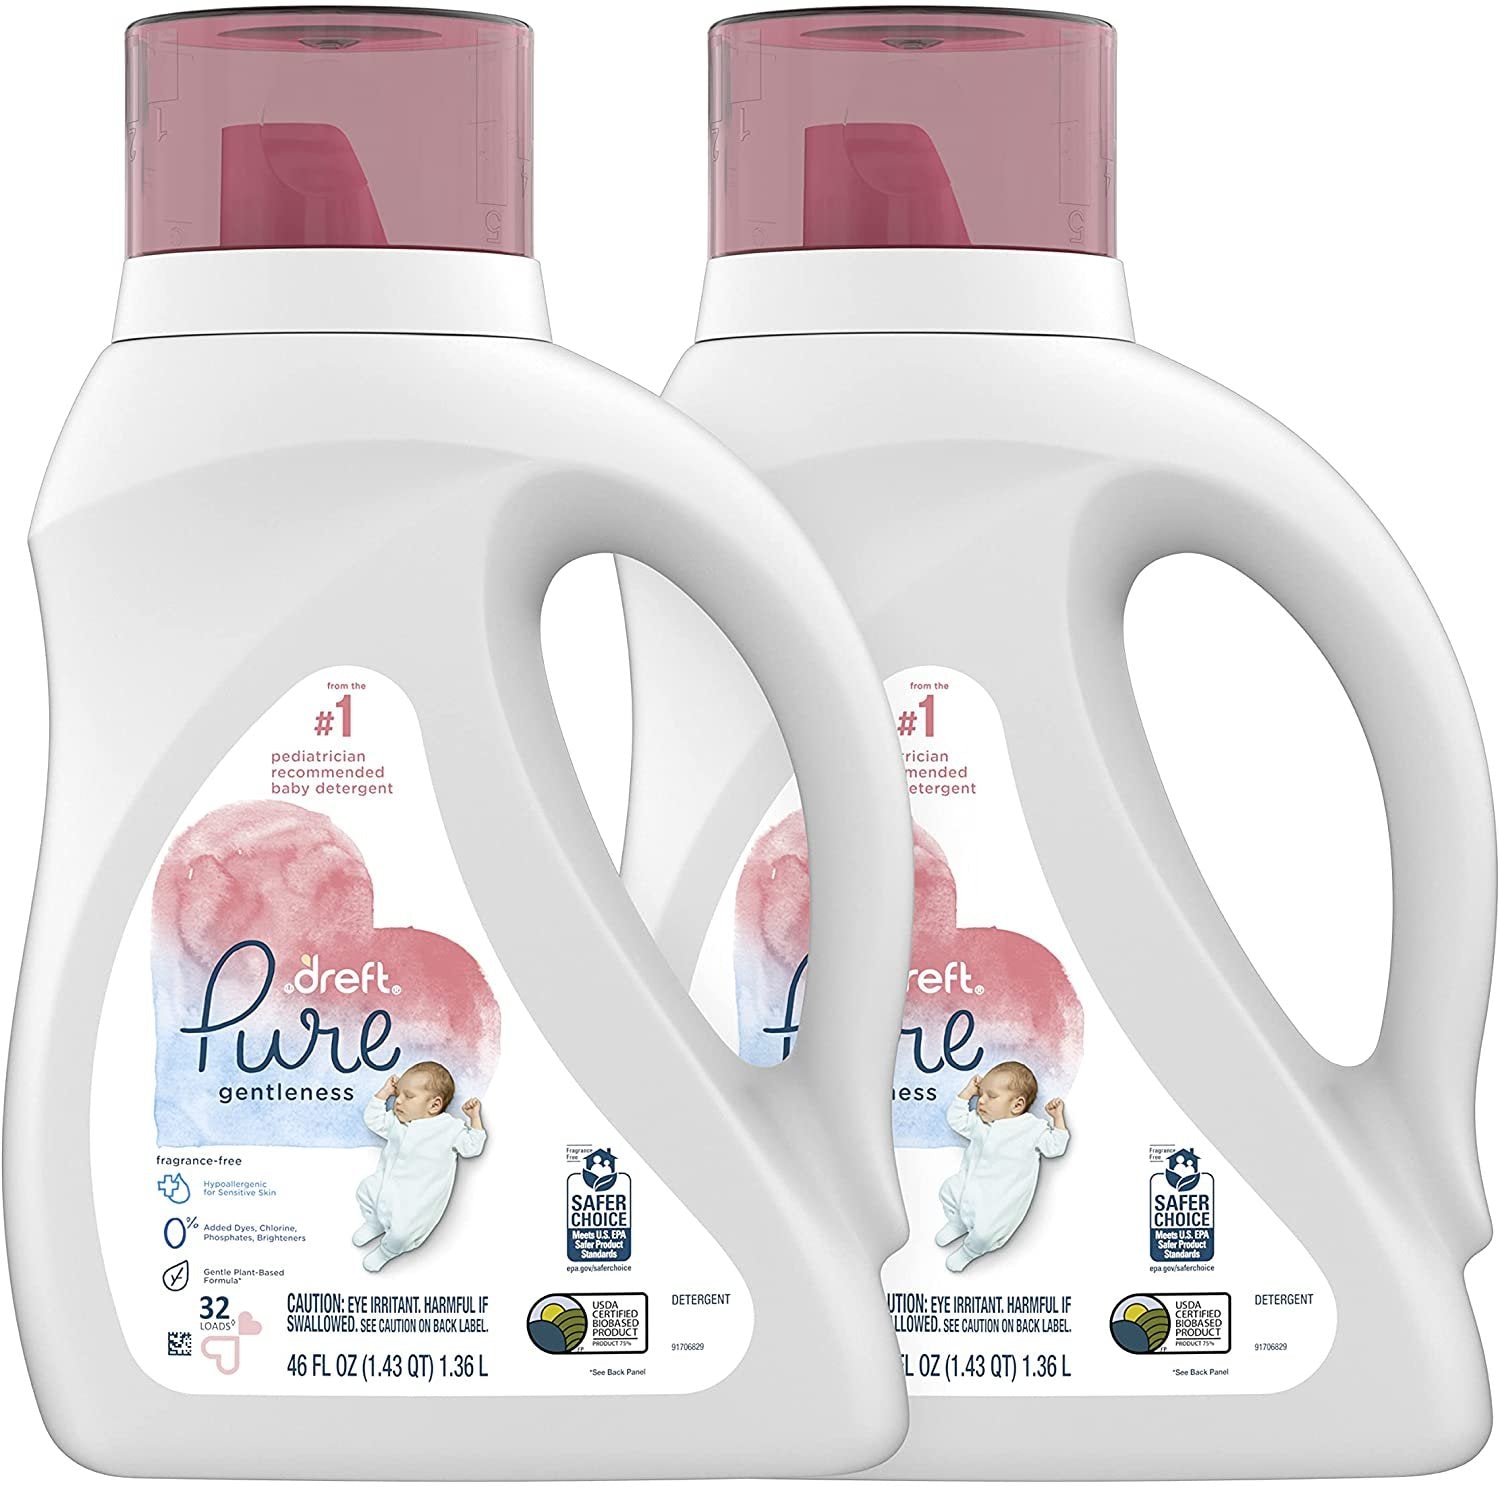 Dreft - Fragrance Free Liquid Laundry Detergent 46oz, Pure Gentleness - Case of 6